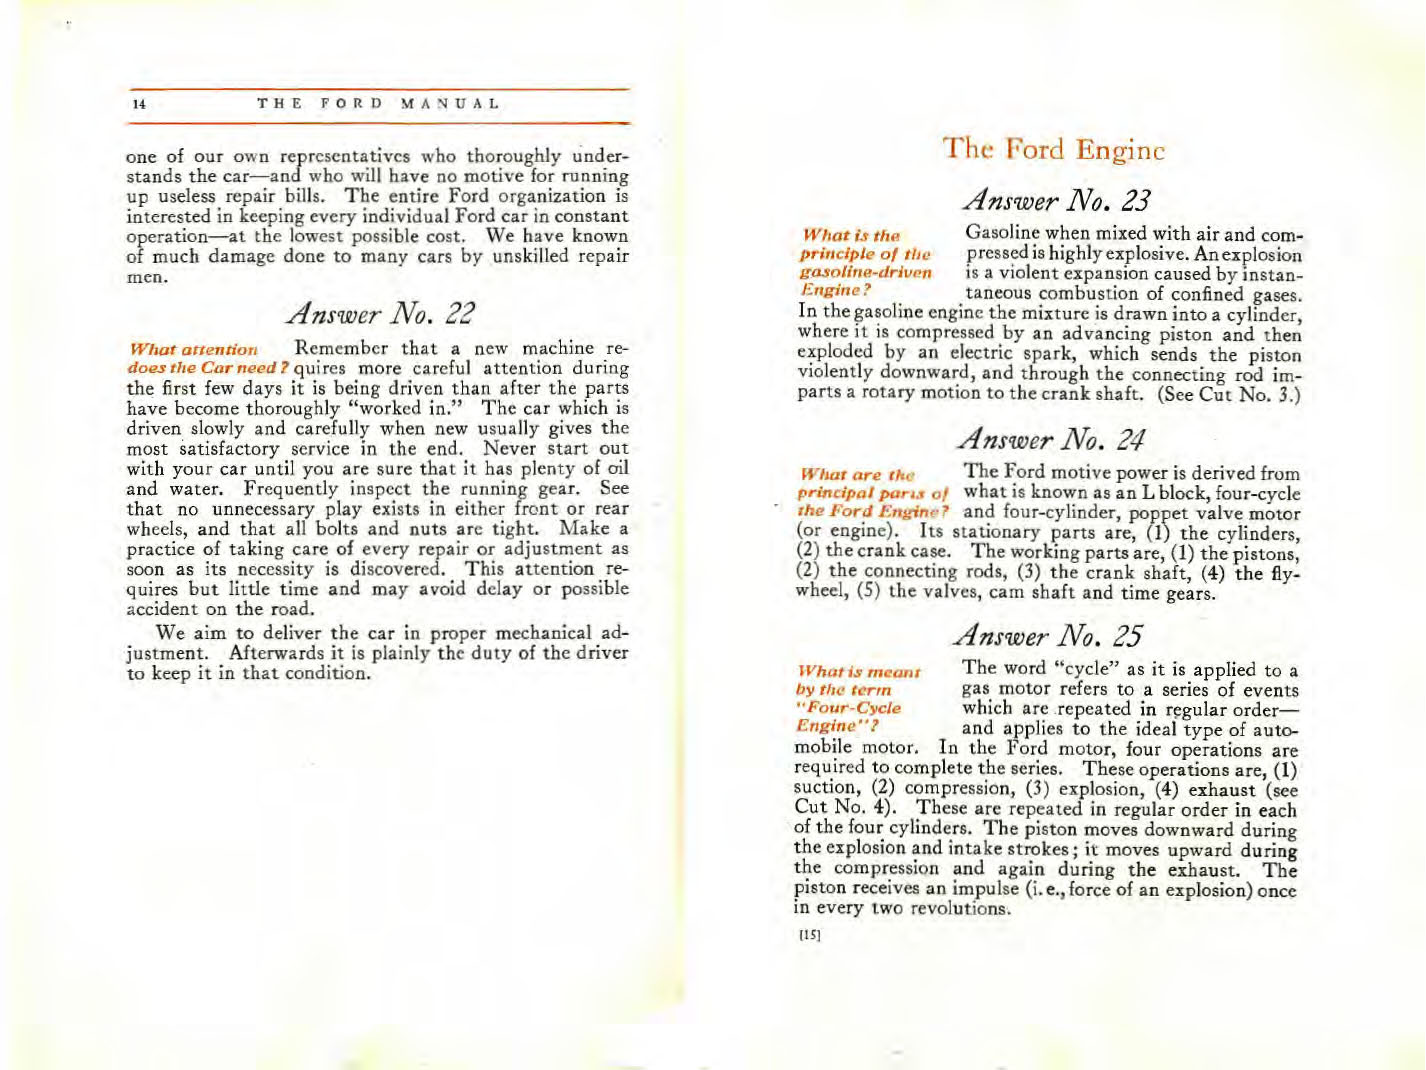 n_1915 Ford Owners Manual-14-15.jpg